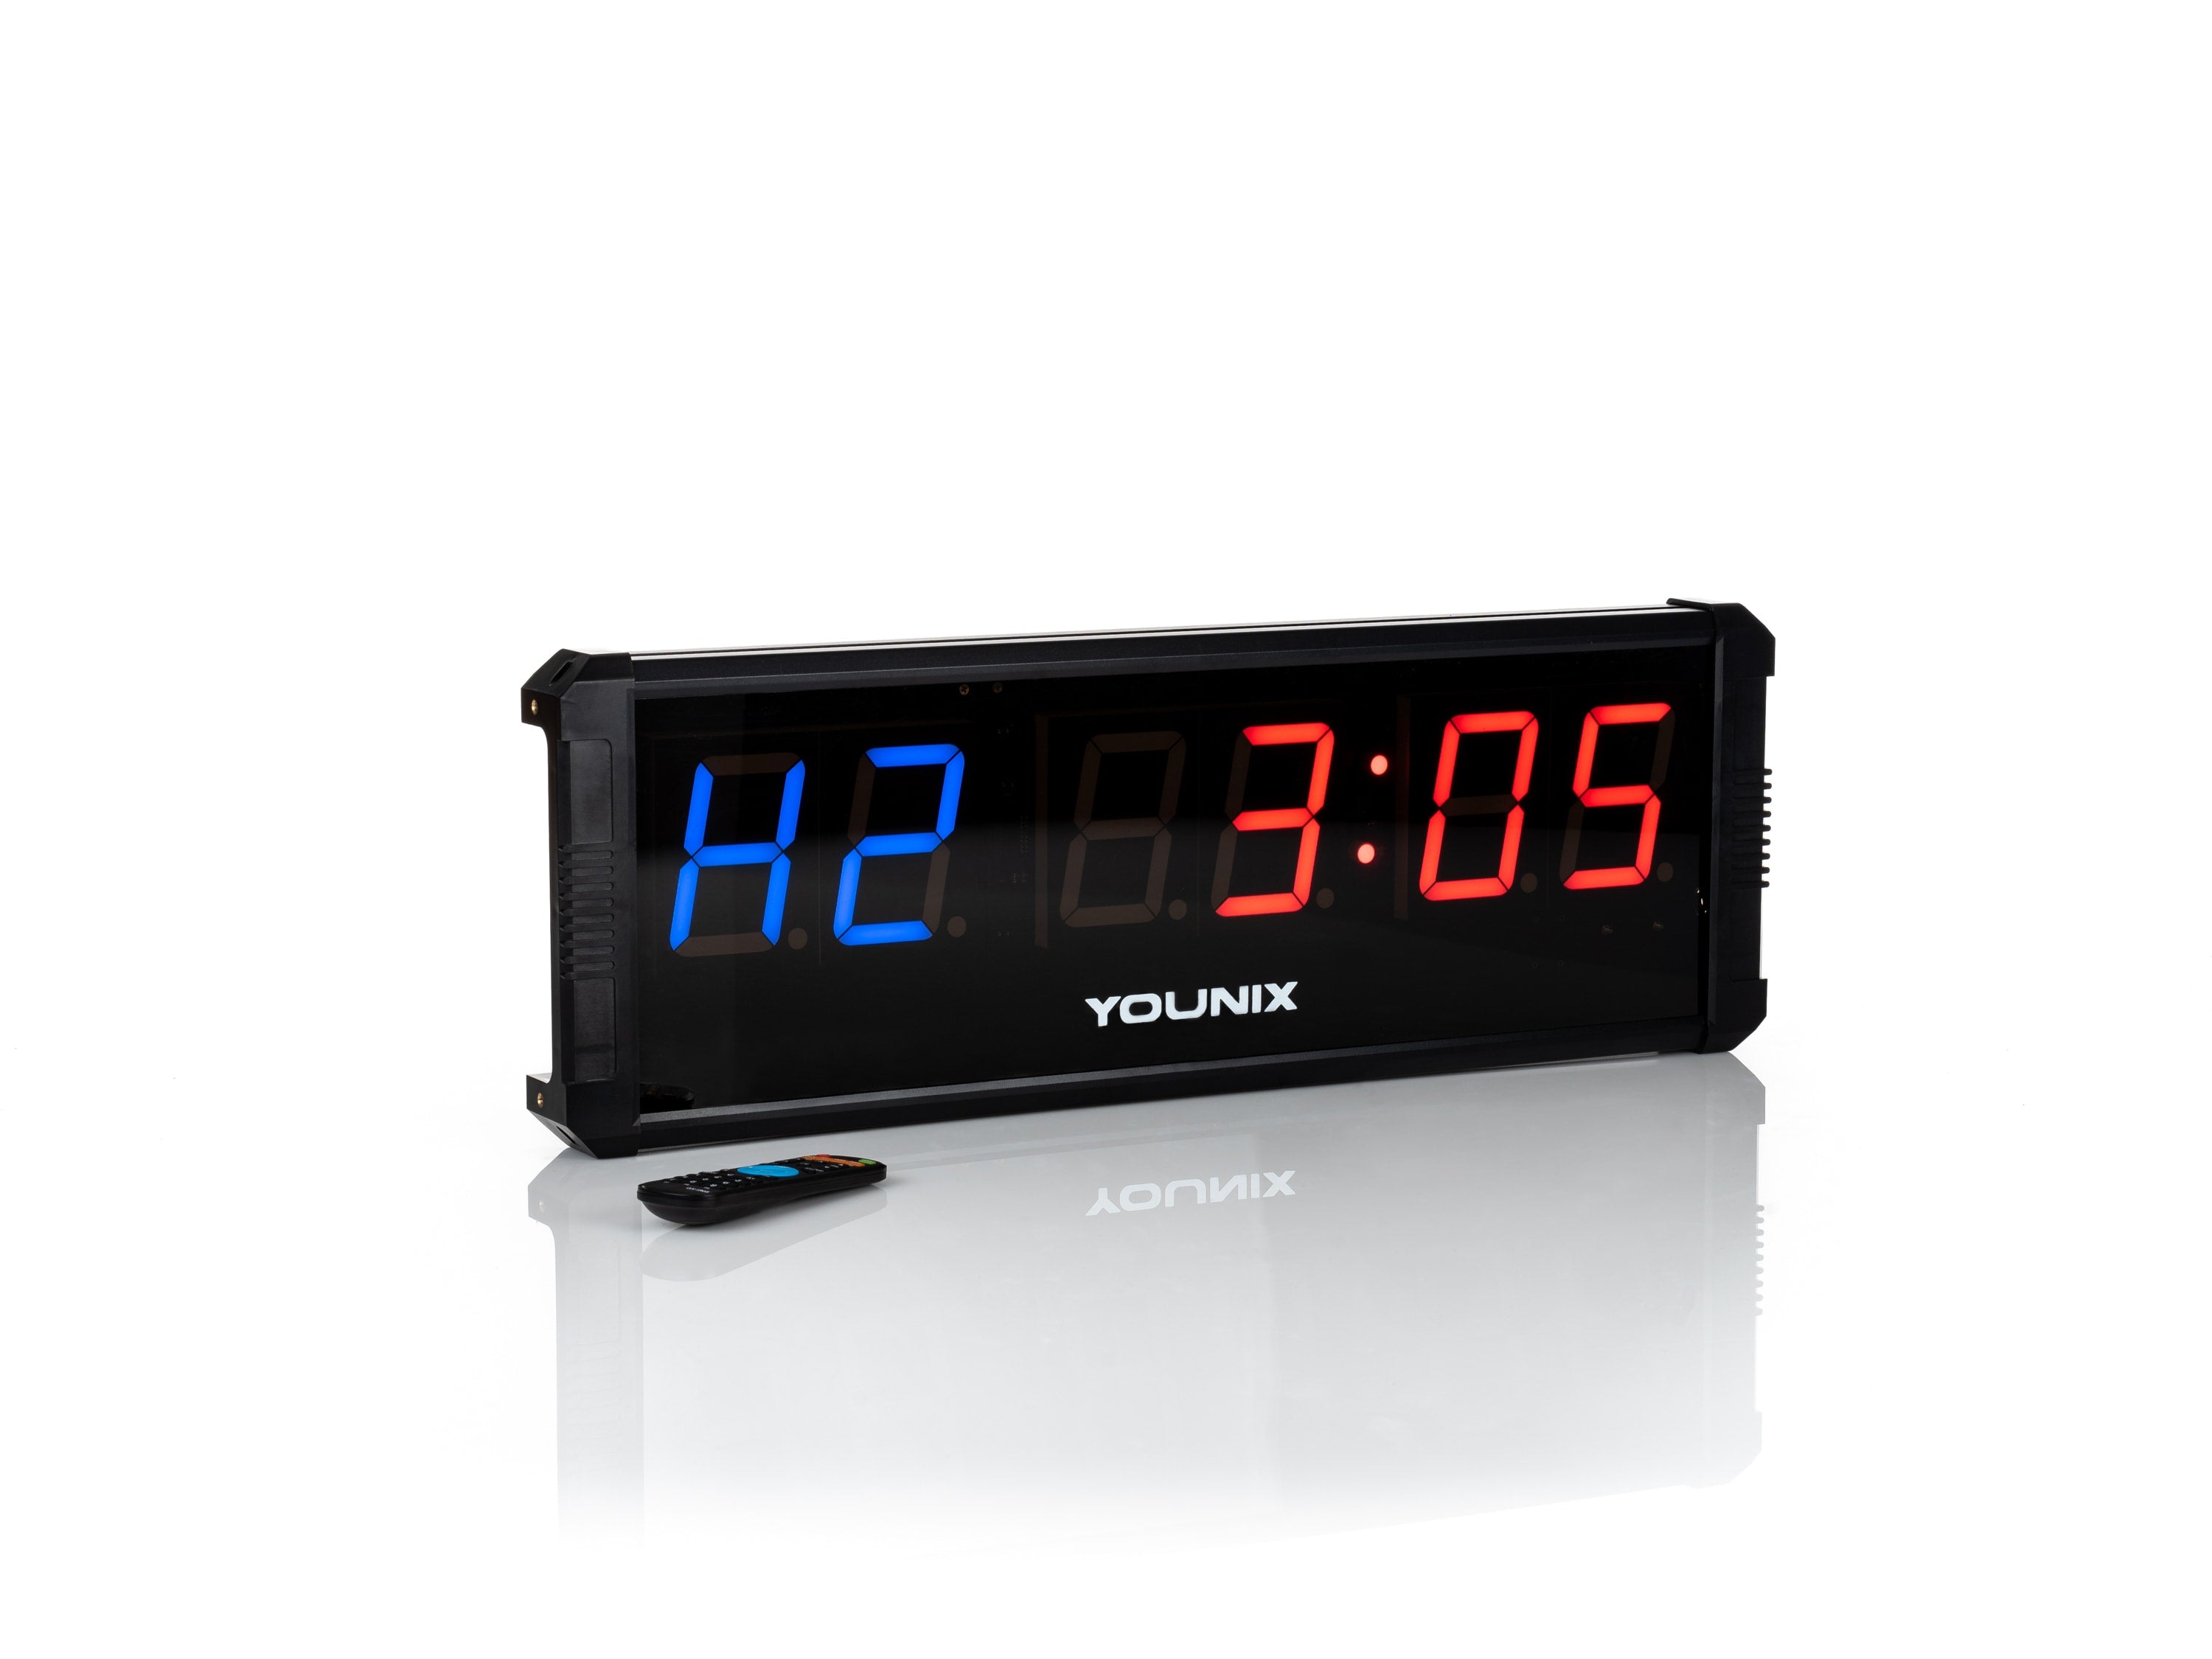 Custom Made Large Digital Wall Clock LED Interval Countdown Timer